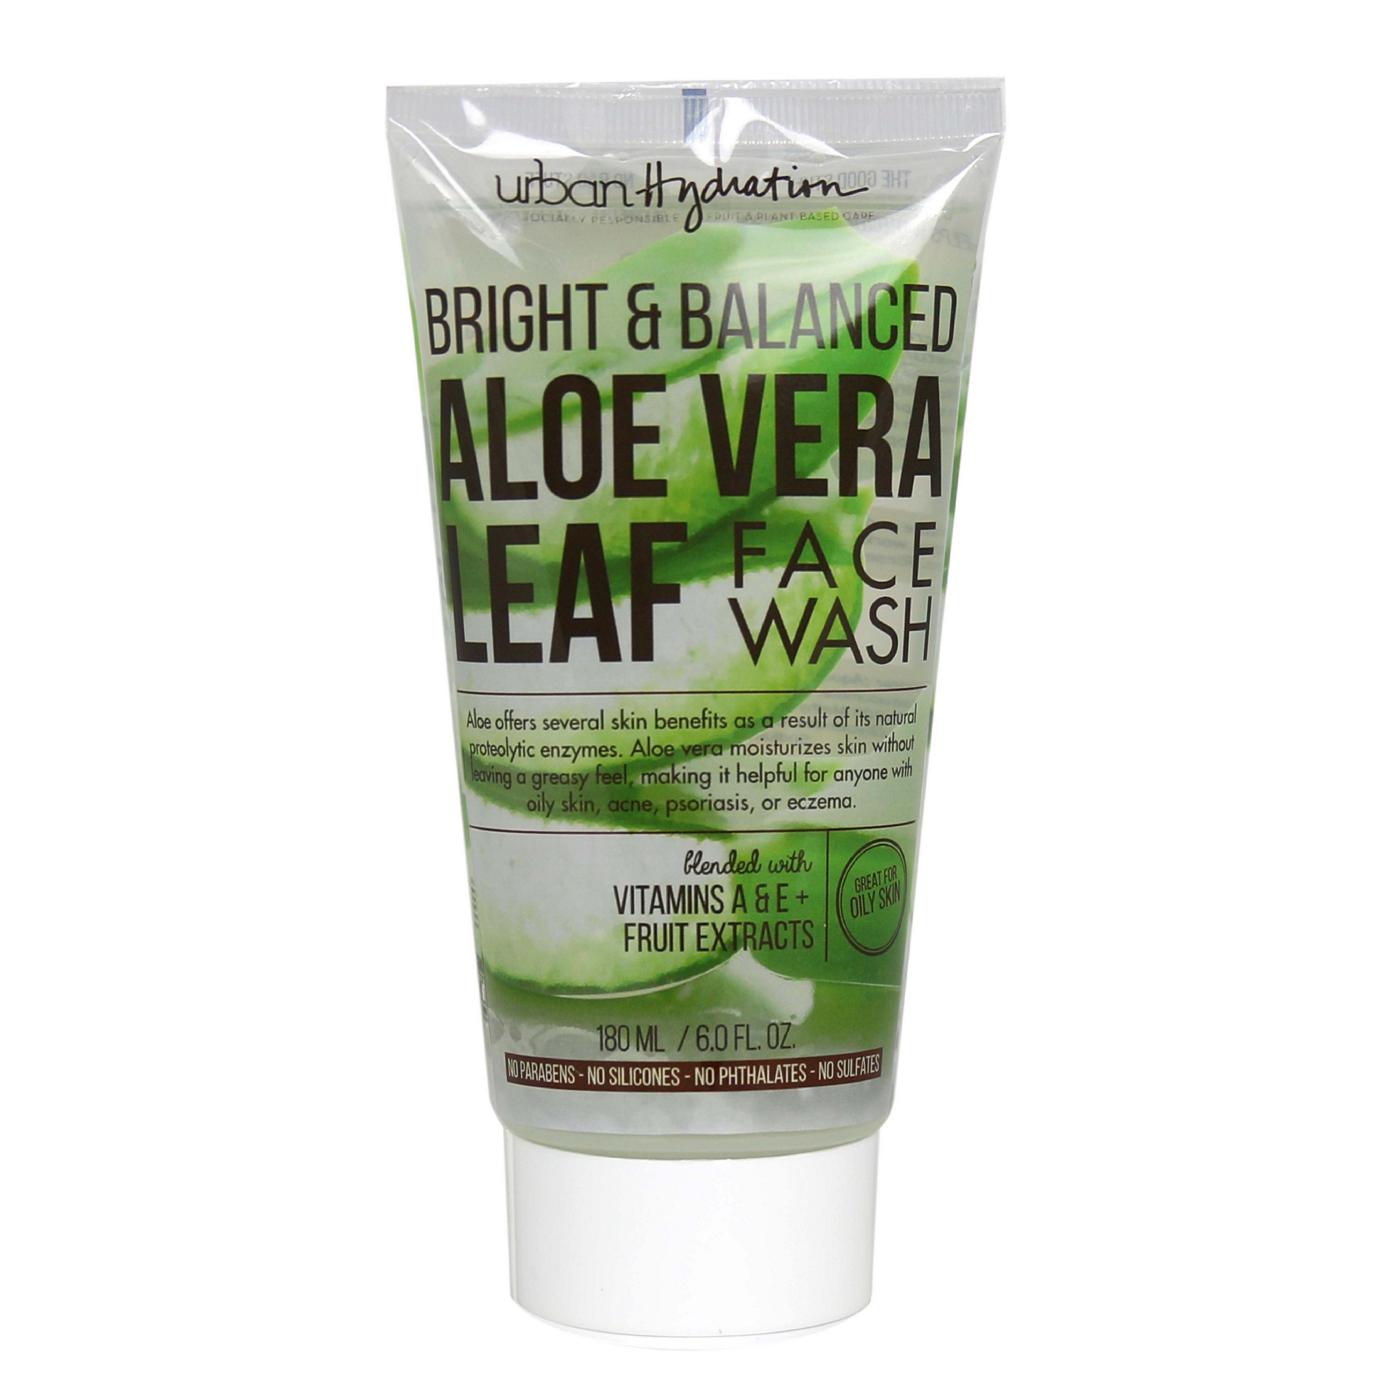 Urban Hydration Bright & Balanced Aloe Vera Leaf Face Wash; image 1 of 2